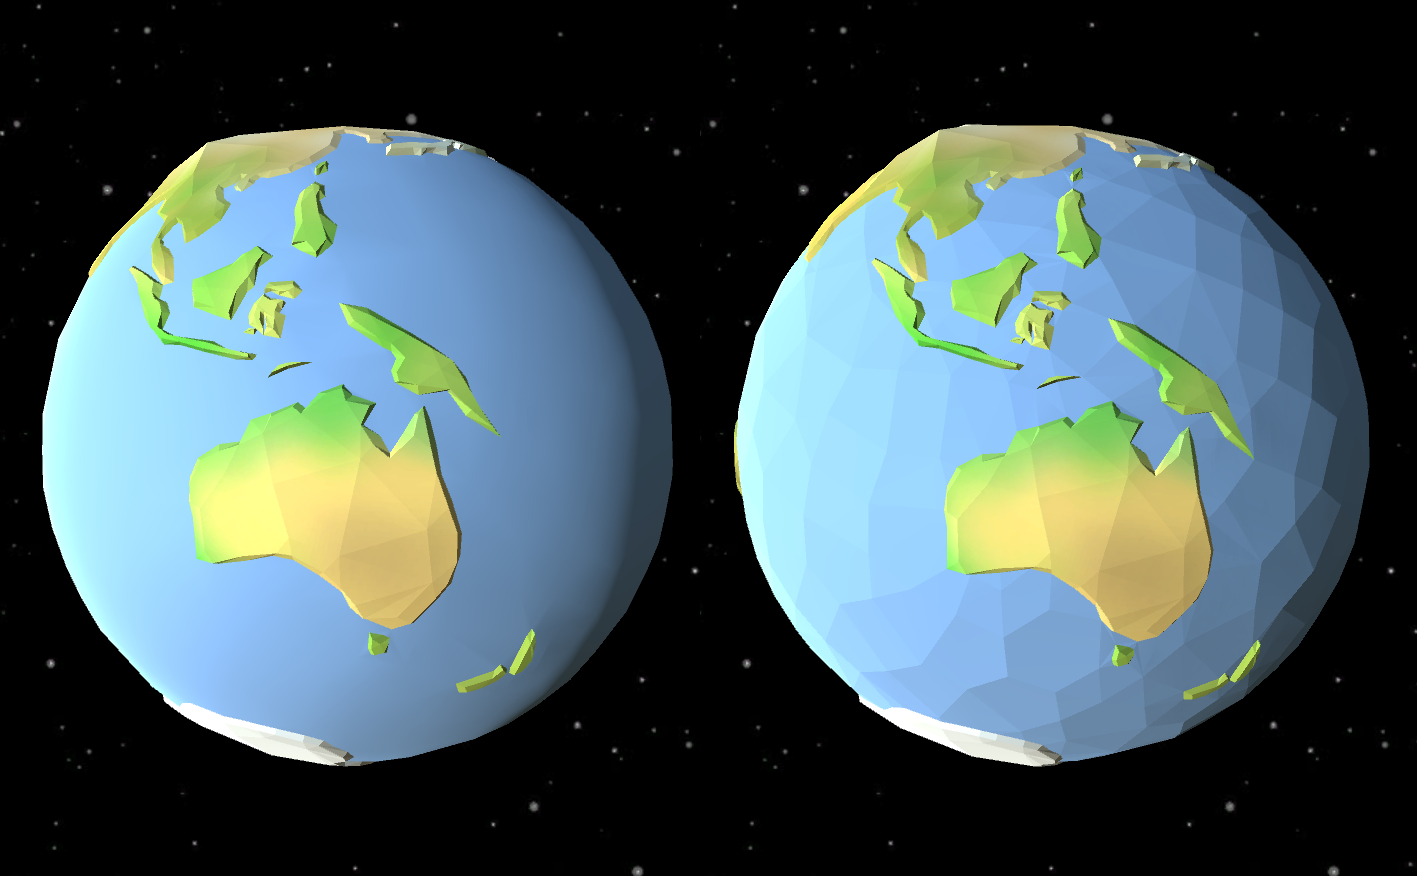 virtual earth 3d models